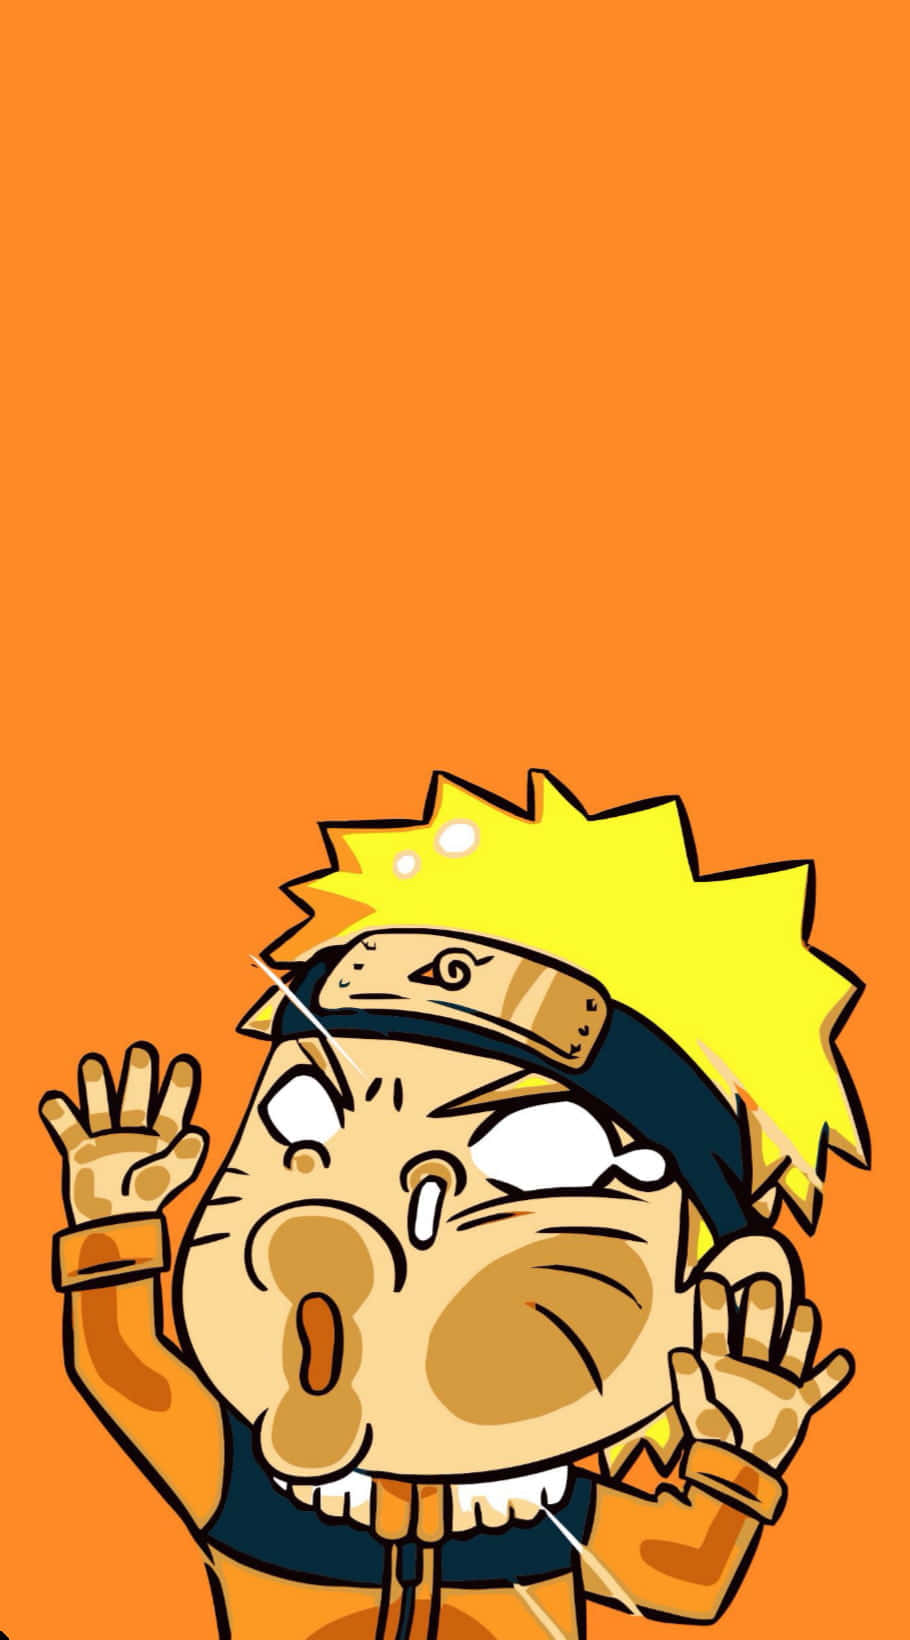 Narutobaggrunde - Naruto Baggrunde